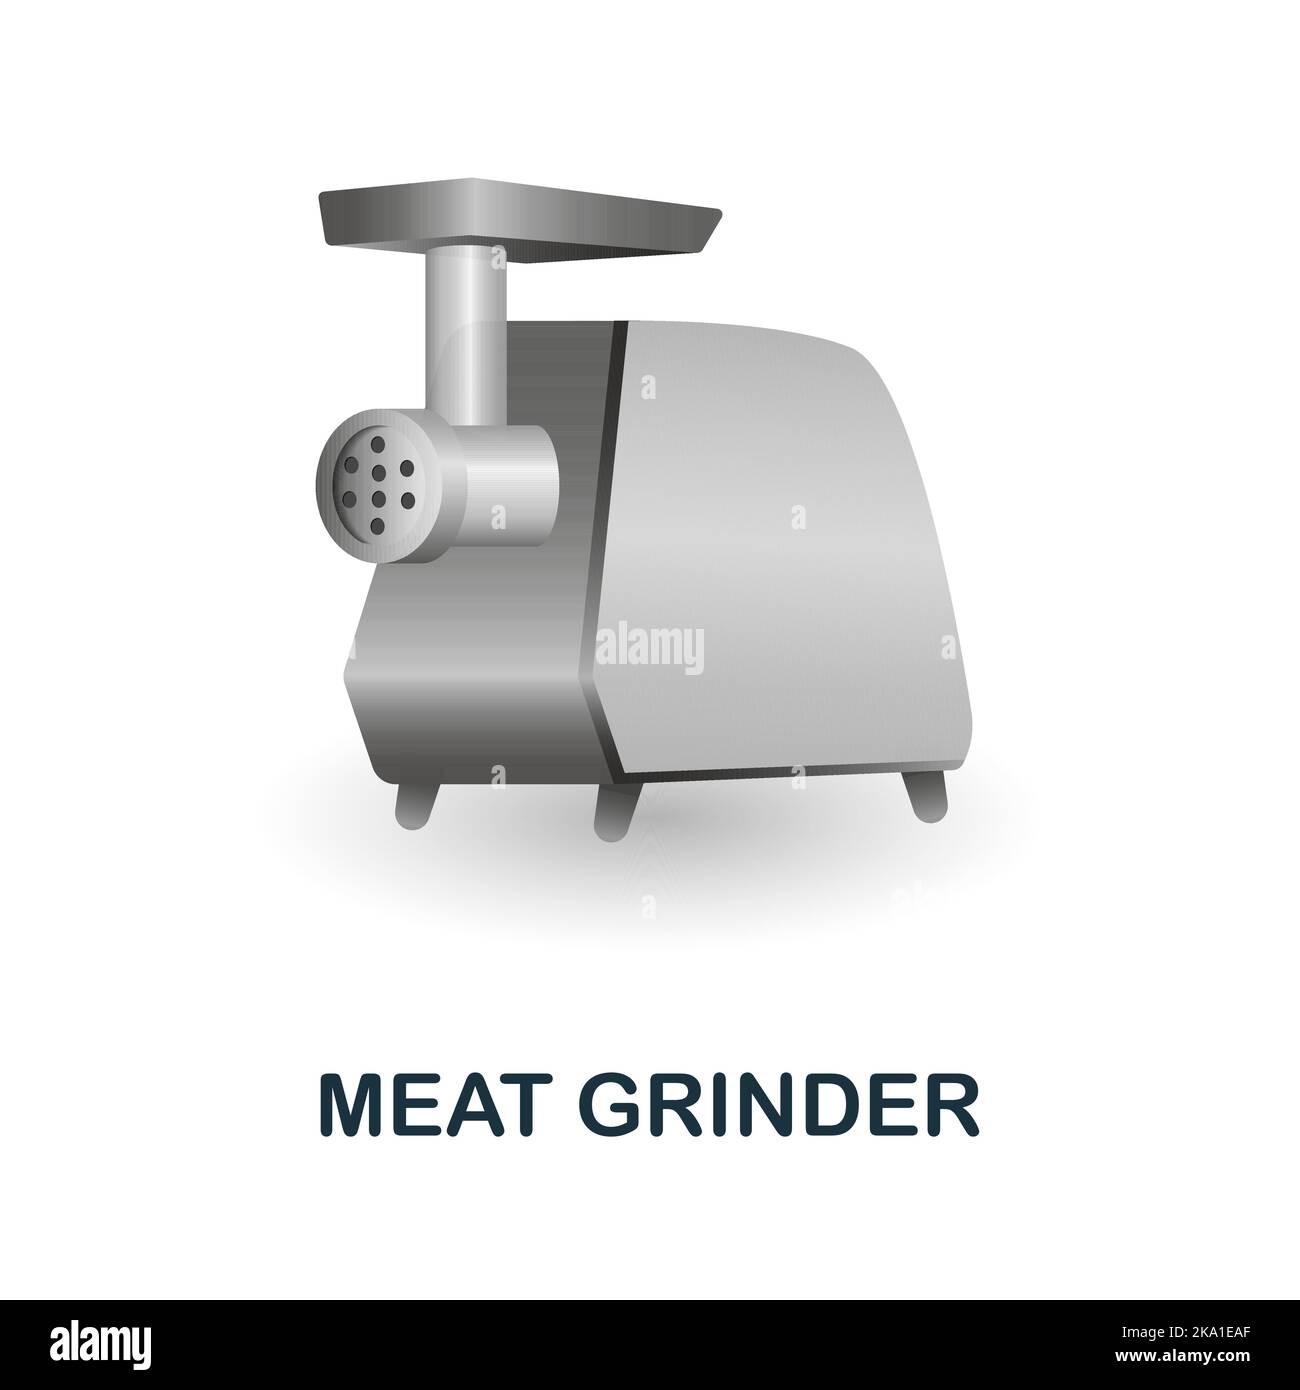 23,634 Meat Grinder Images, Stock Photos, 3D objects, & Vectors